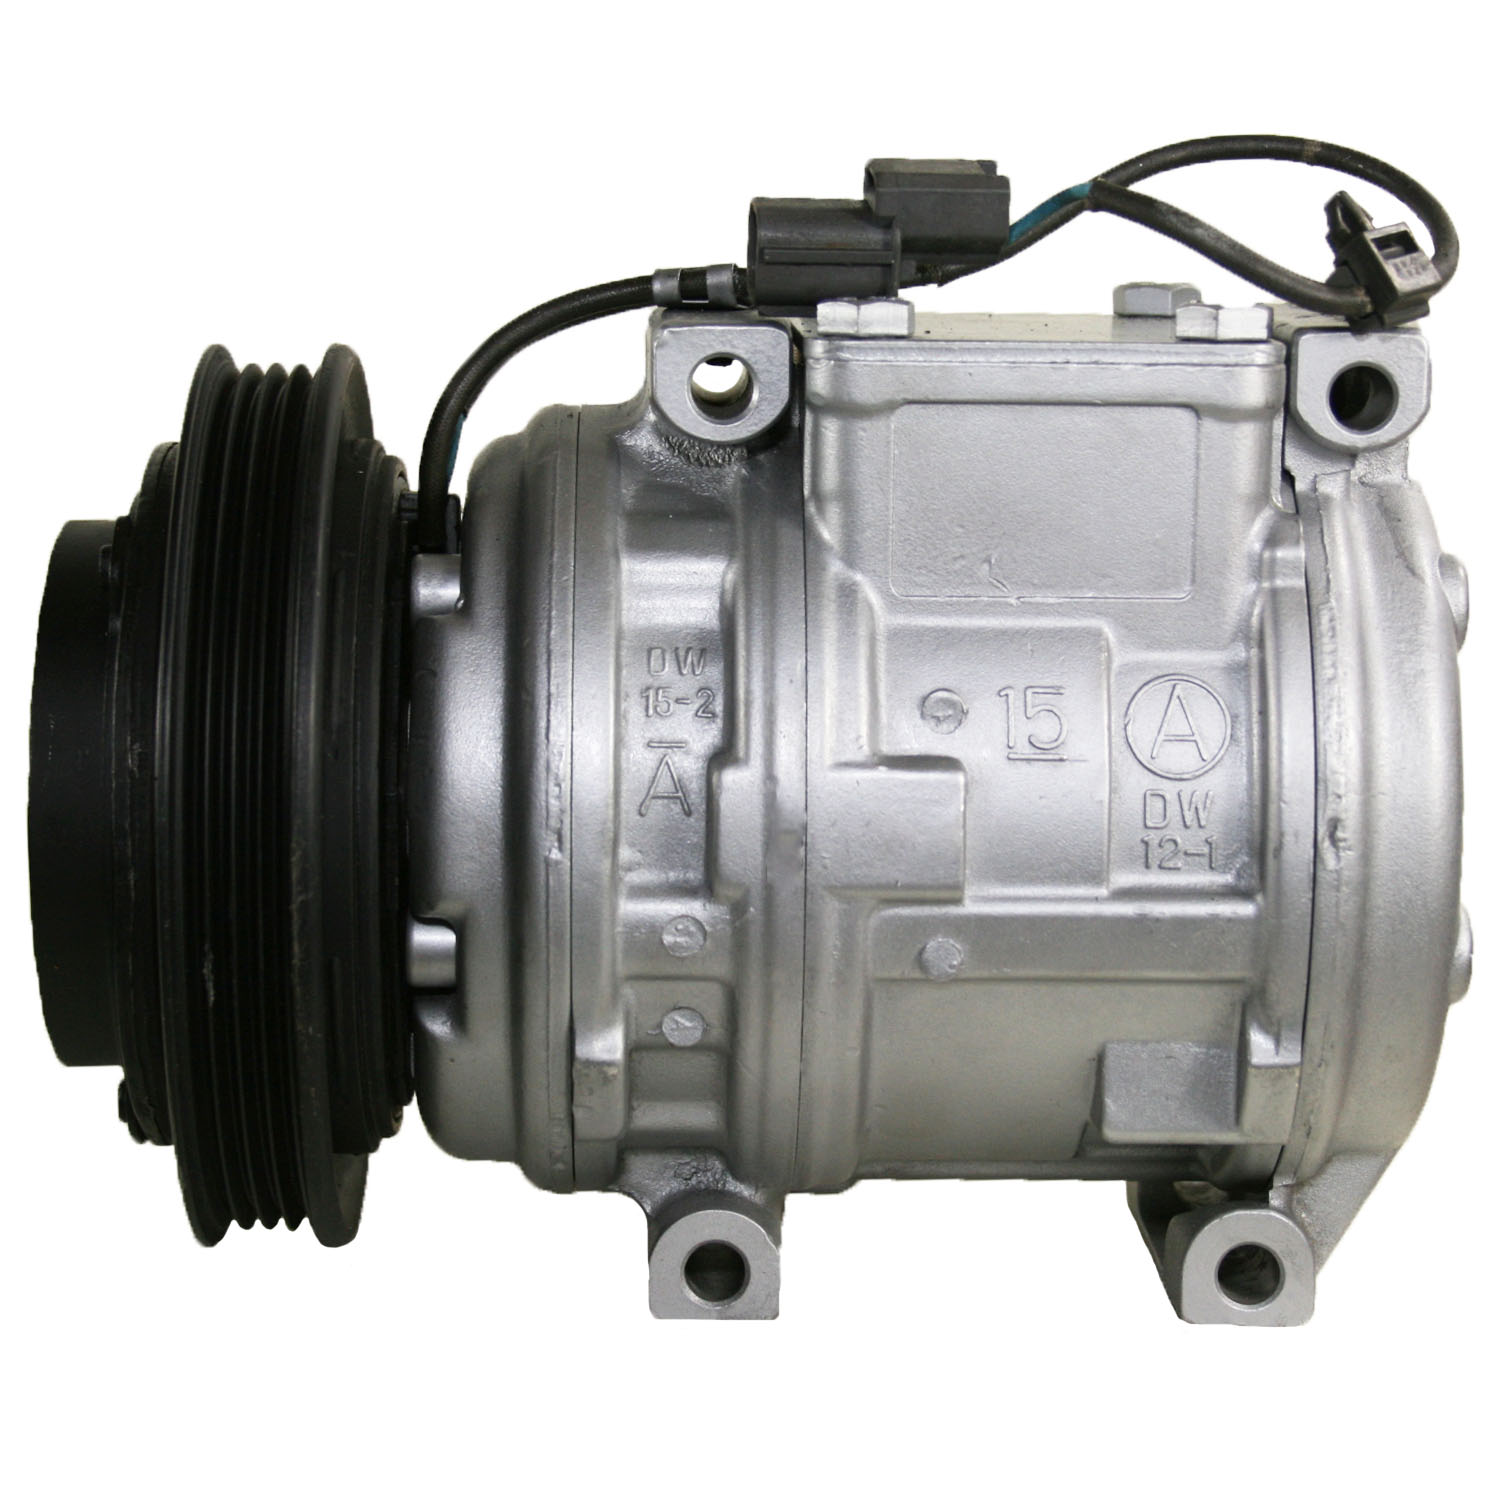 TCW Compressor 31216.402 Remanufactured